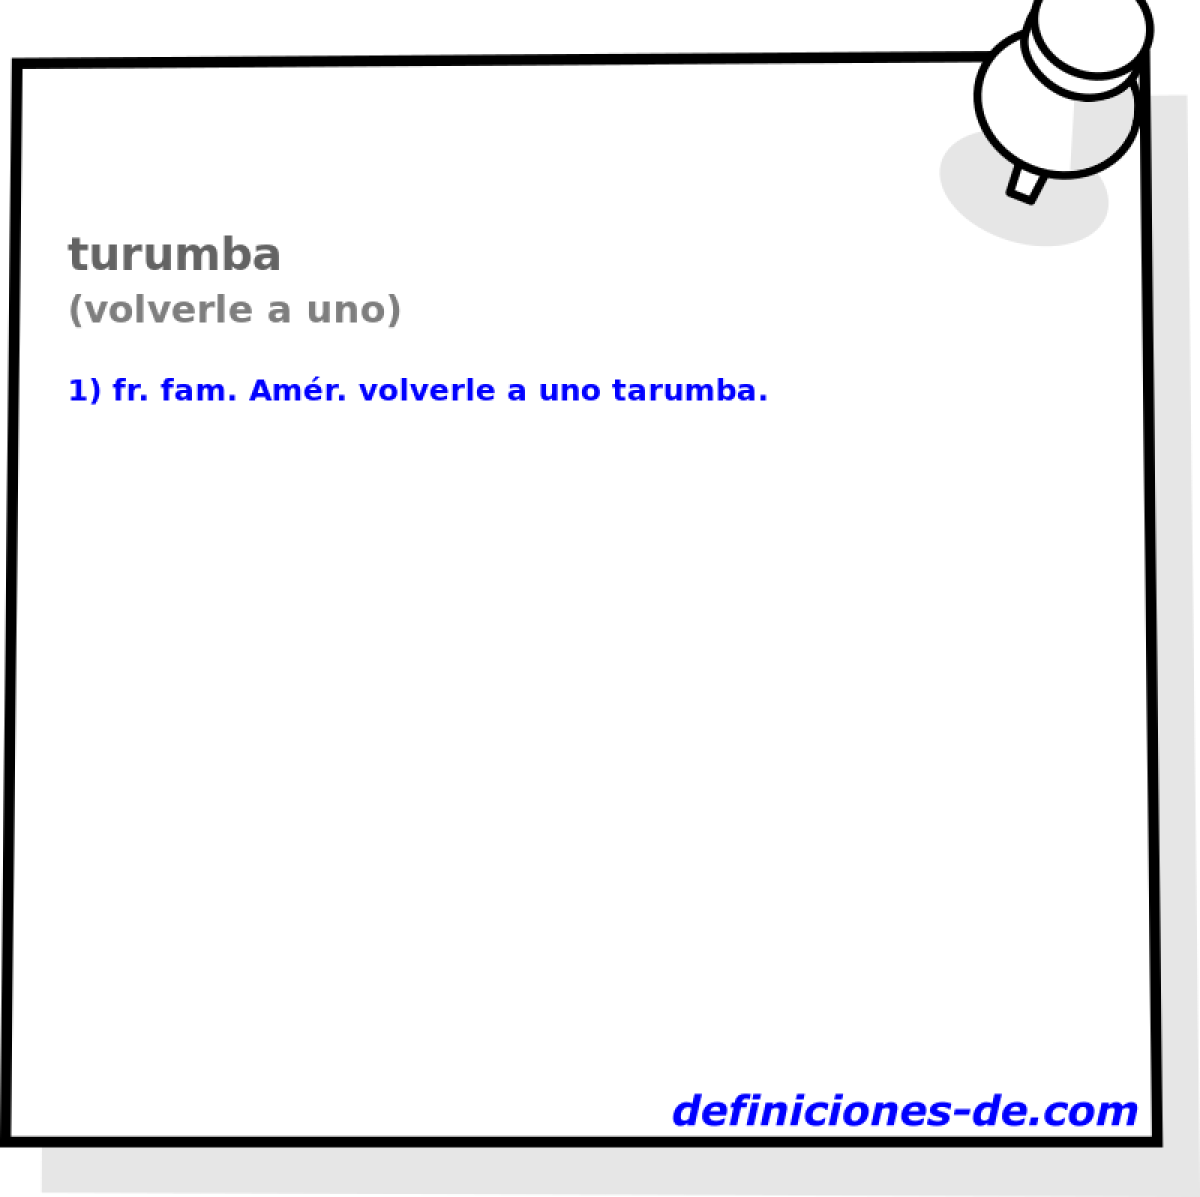 turumba (volverle a uno)